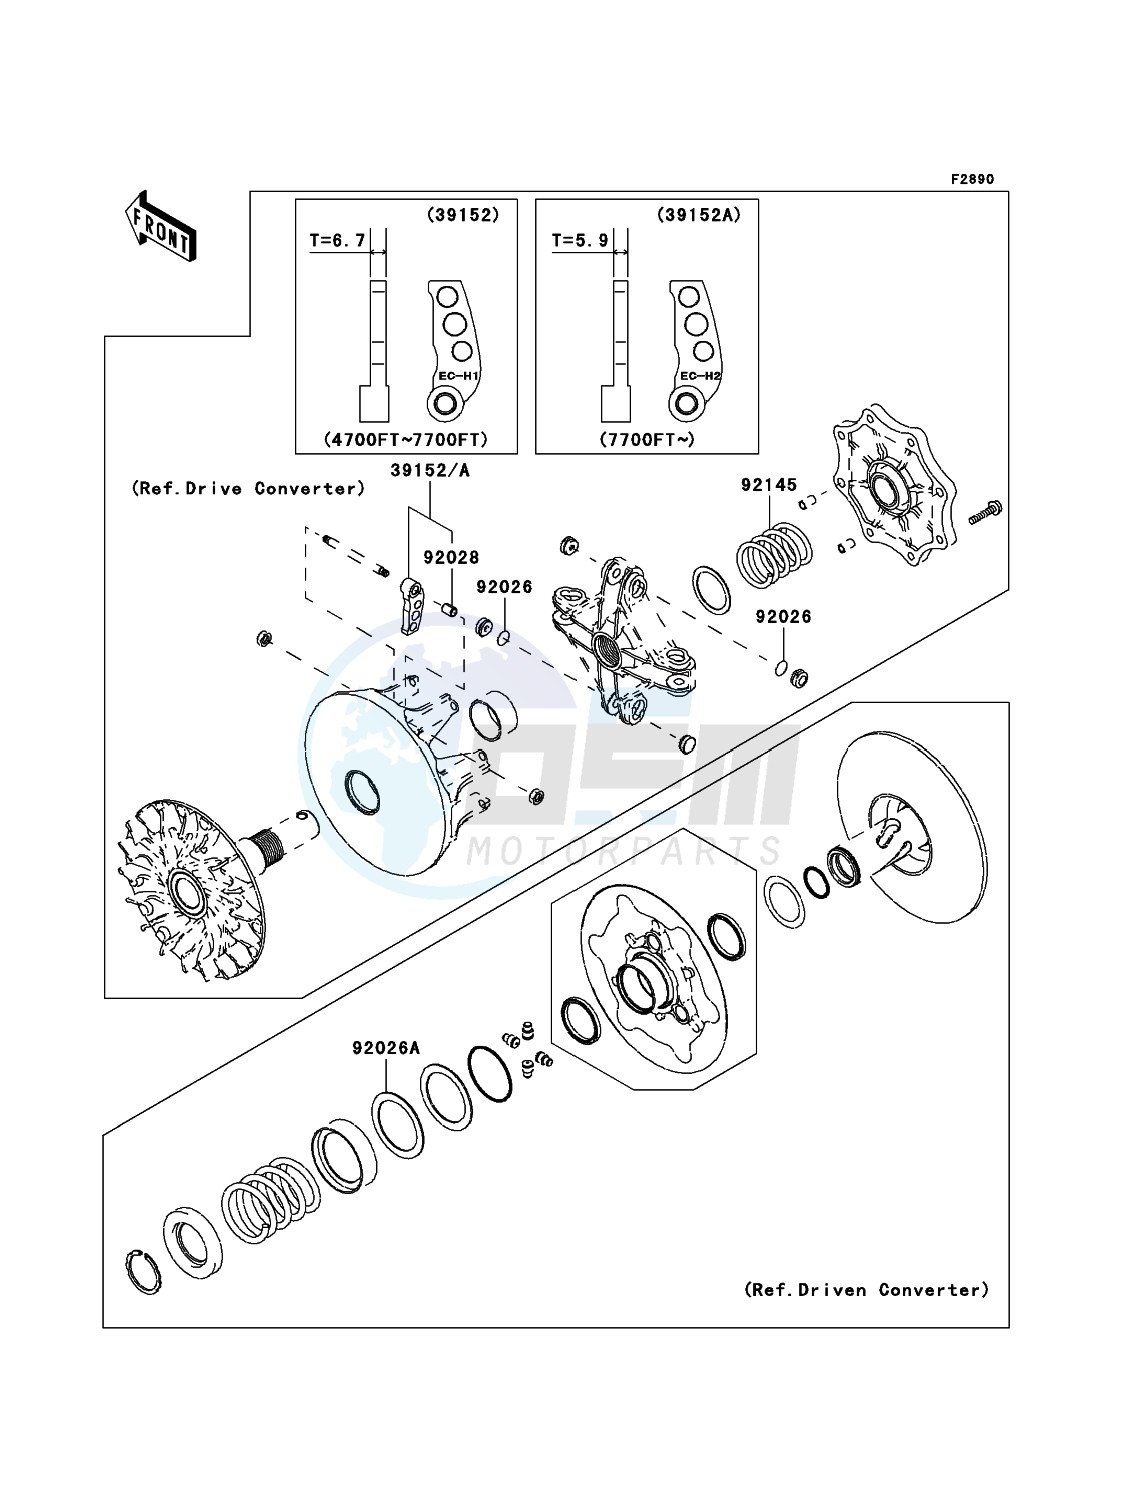 Optional Parts(Converter) blueprint